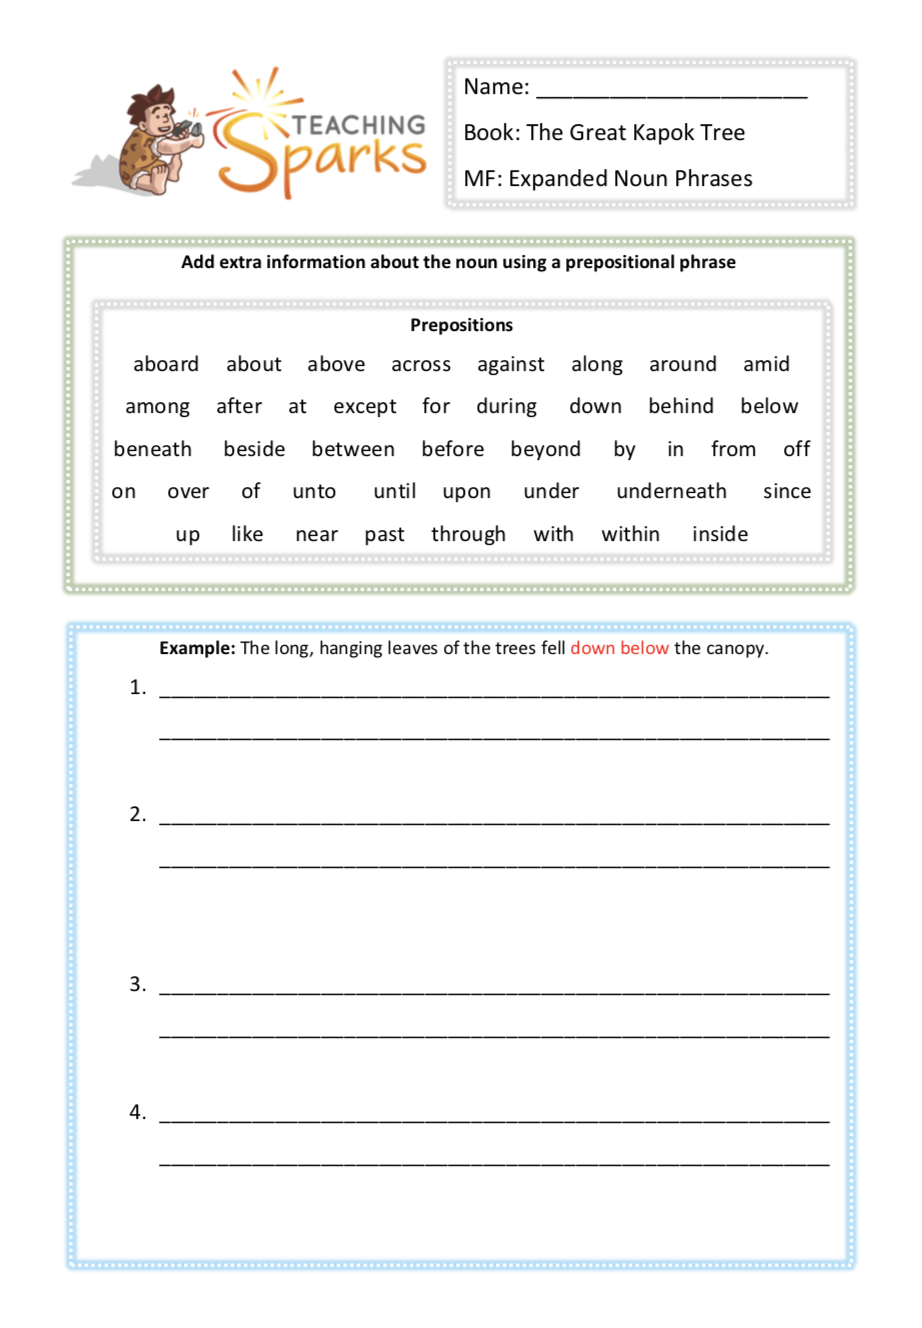 nouns-worksheets-nouns-worksheet-nouns-teaching-nouns